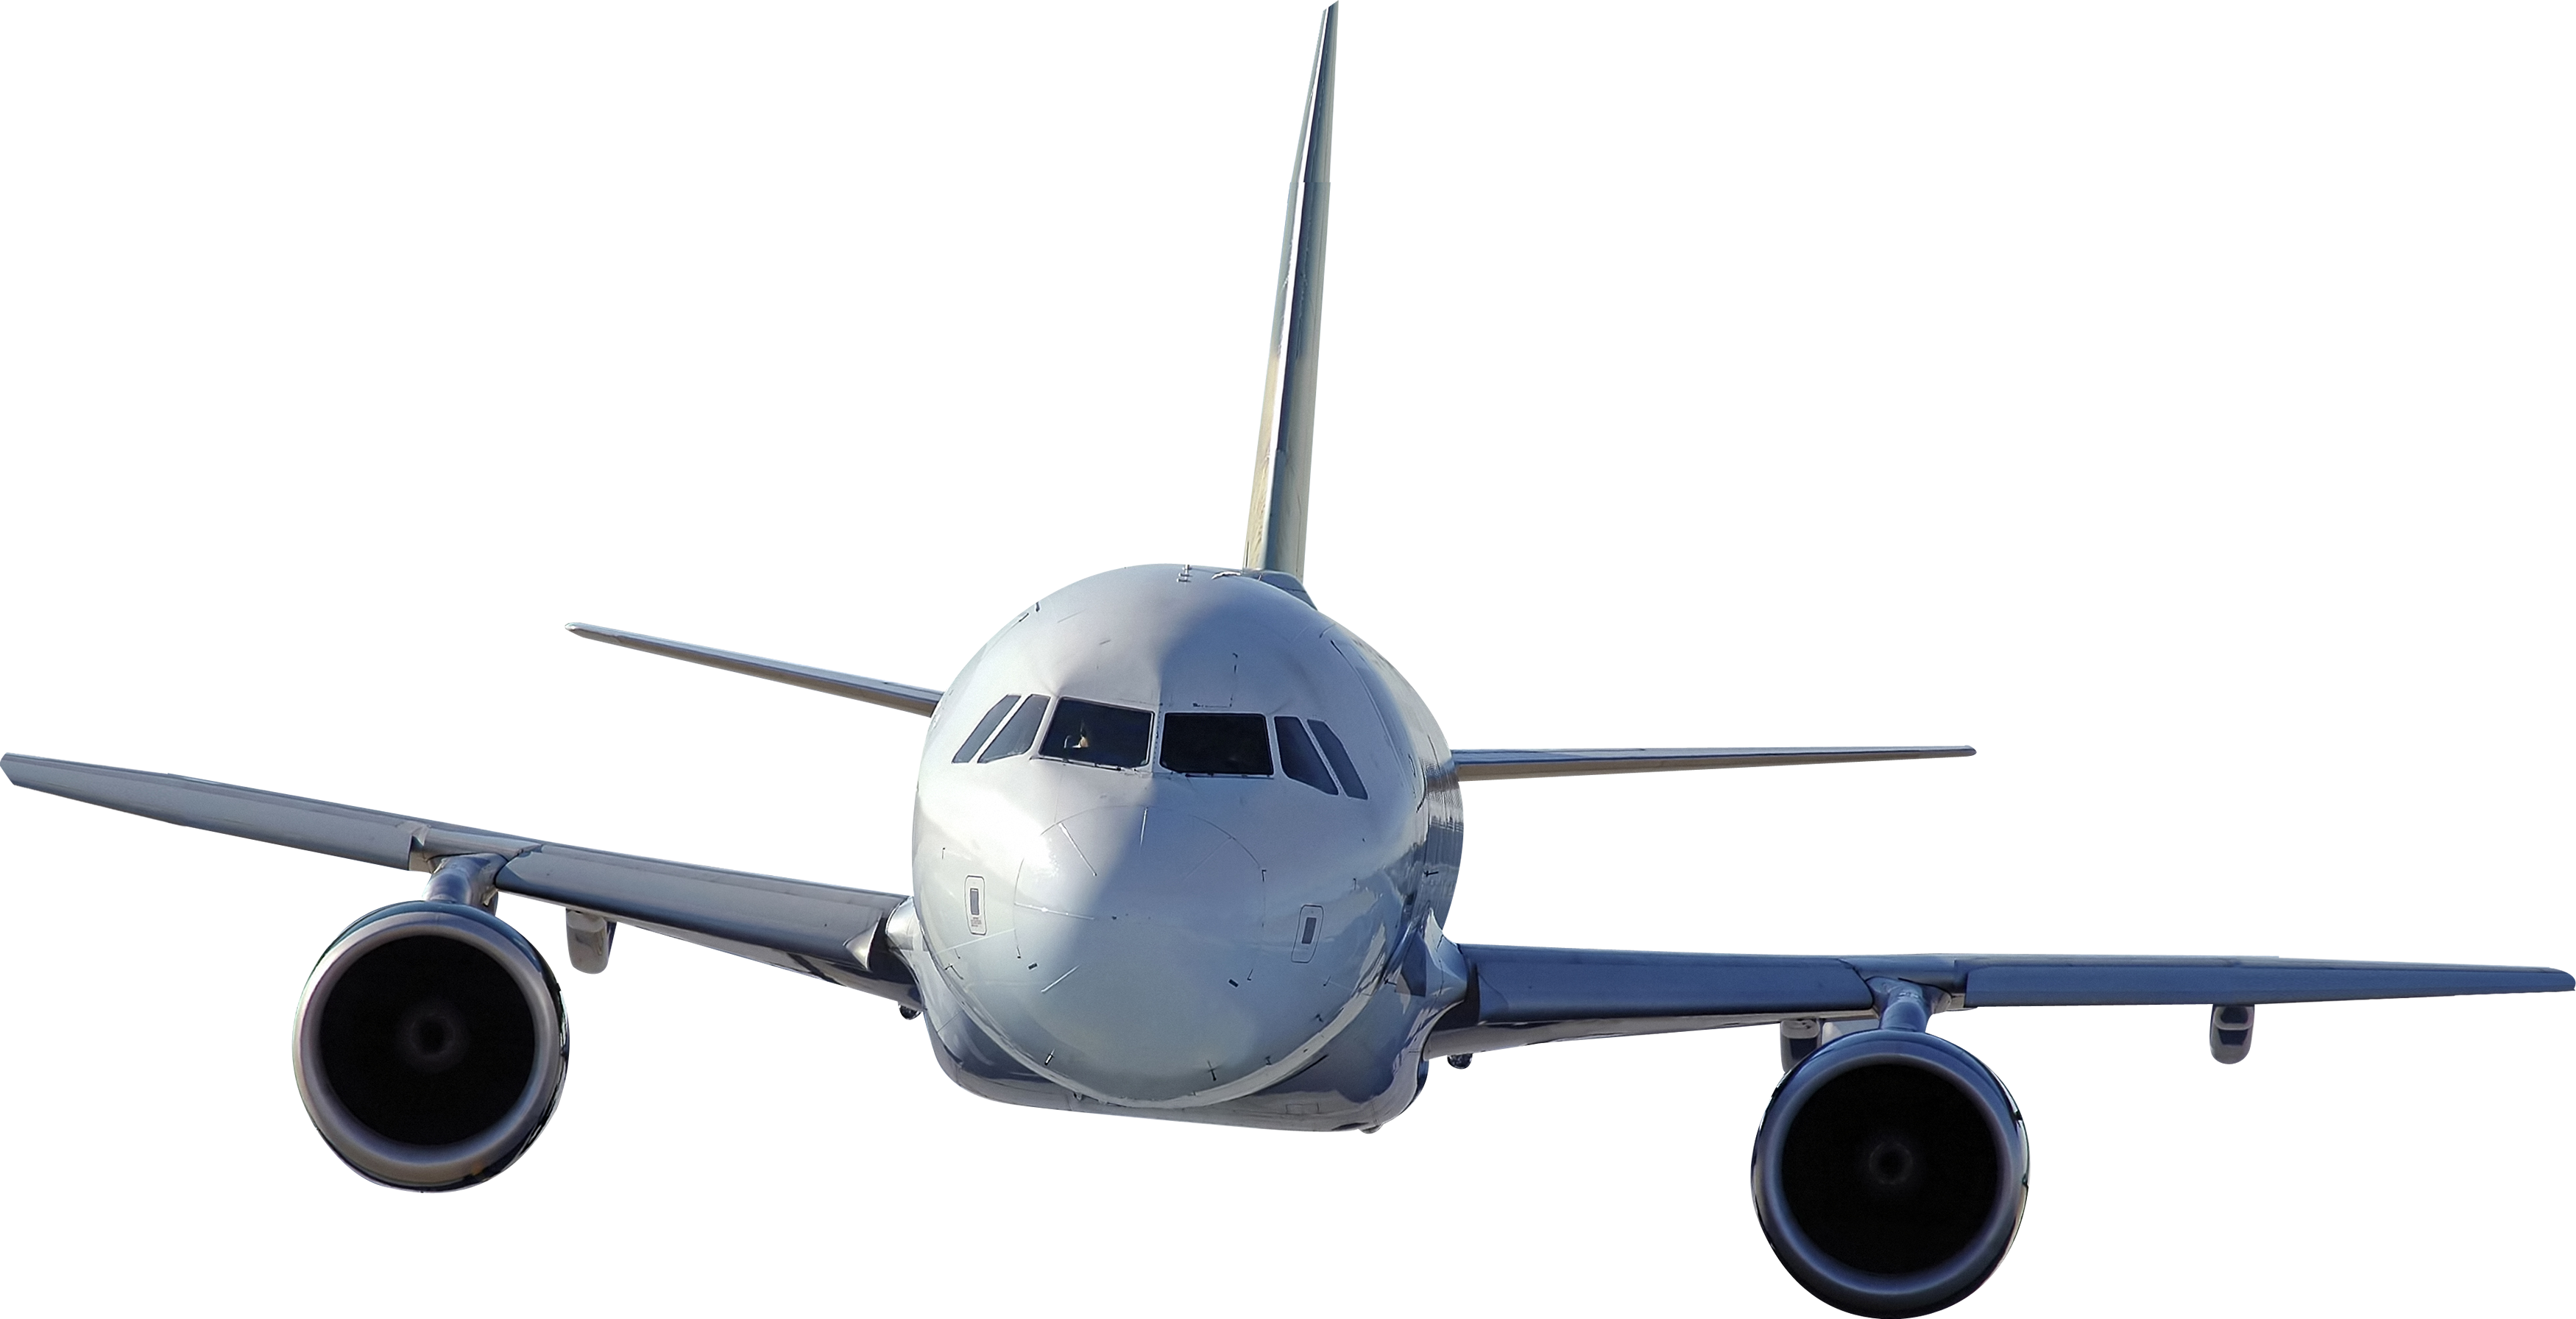 Jet clipart jetliner. White plane png image